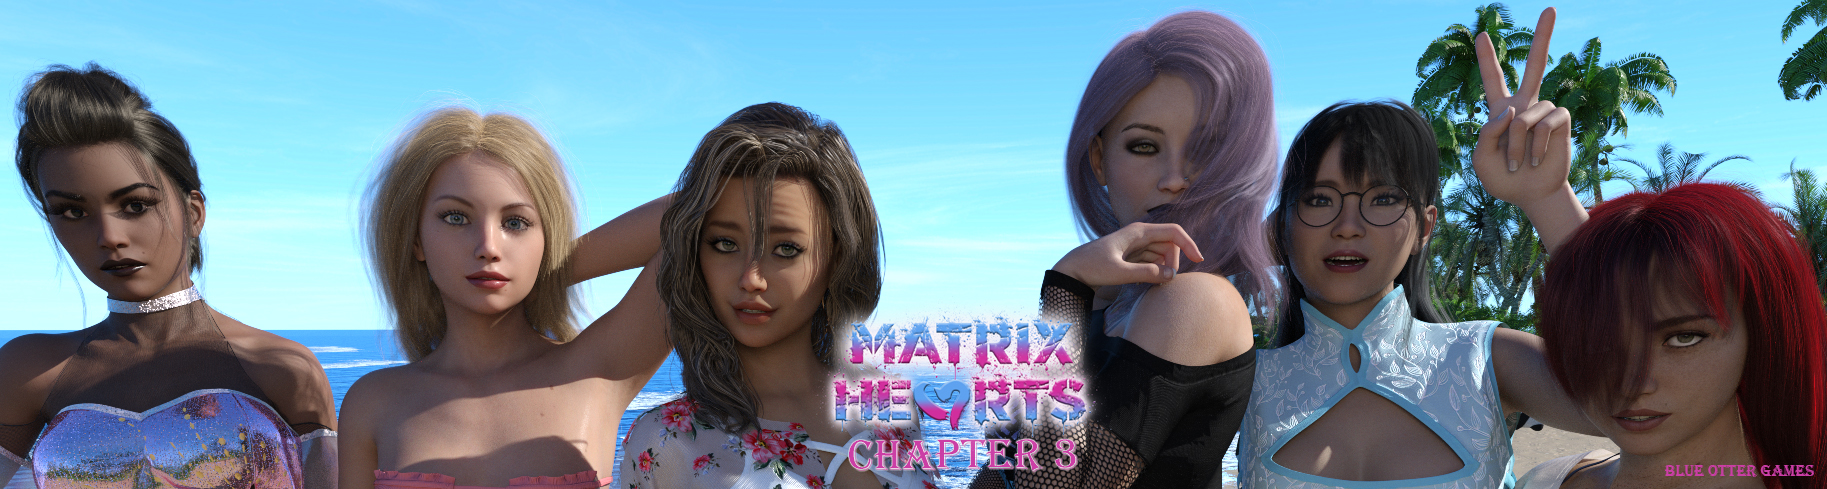 Matrix Hearts1.jpg